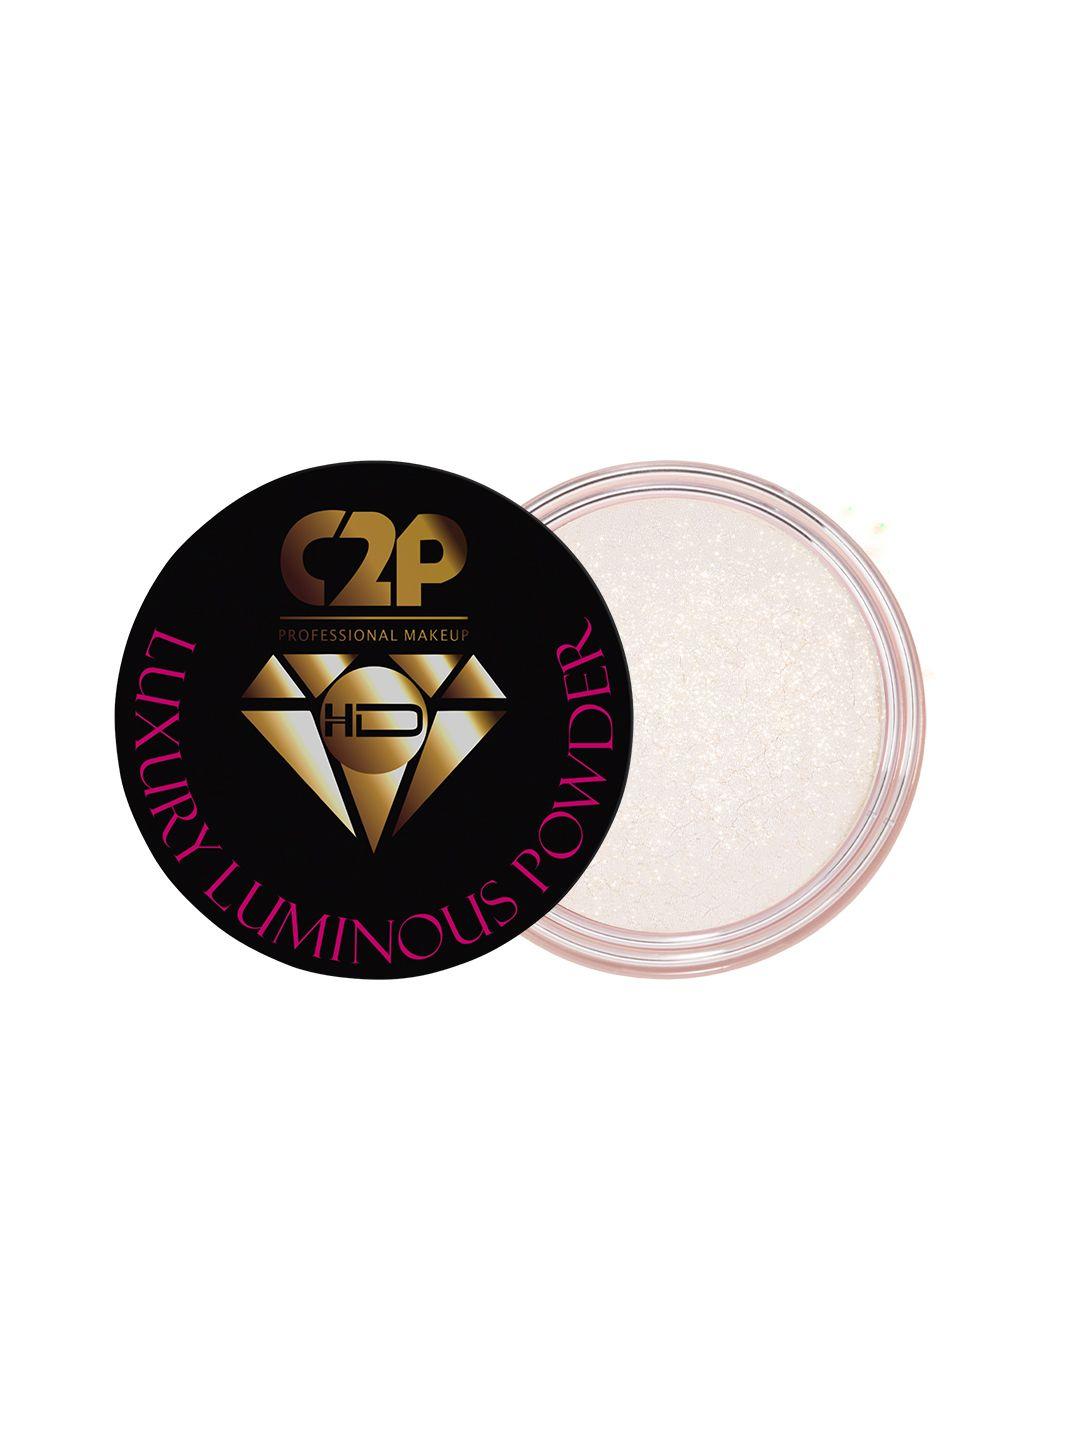 c2p professional makeup hd luxury luminous shimmer powder - beige 06